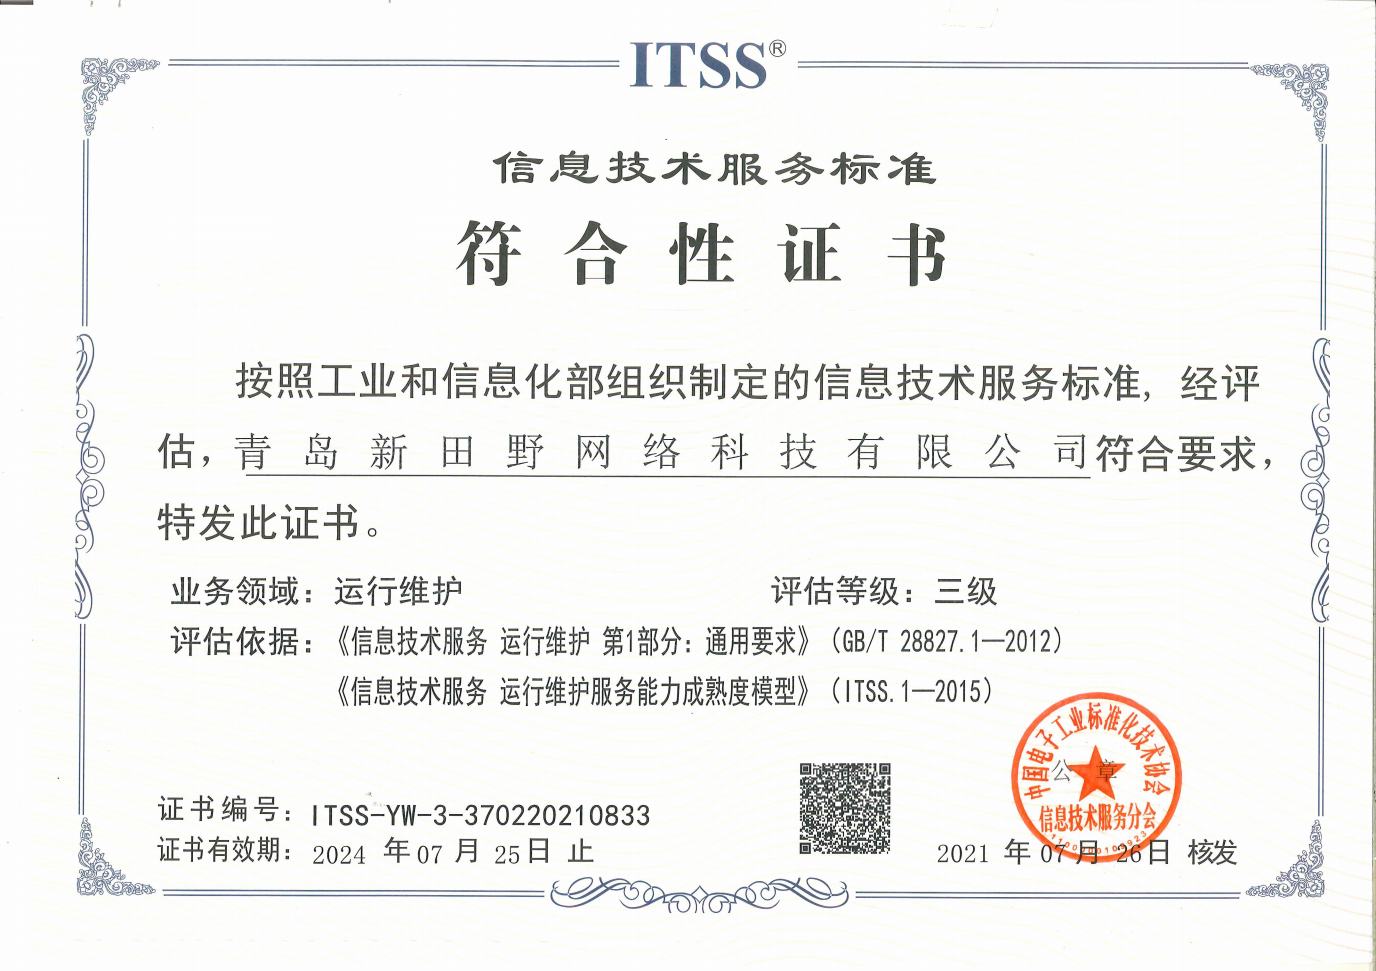 ITSS-青岛新田野网络科技有限公司(1)_Page1.jpg